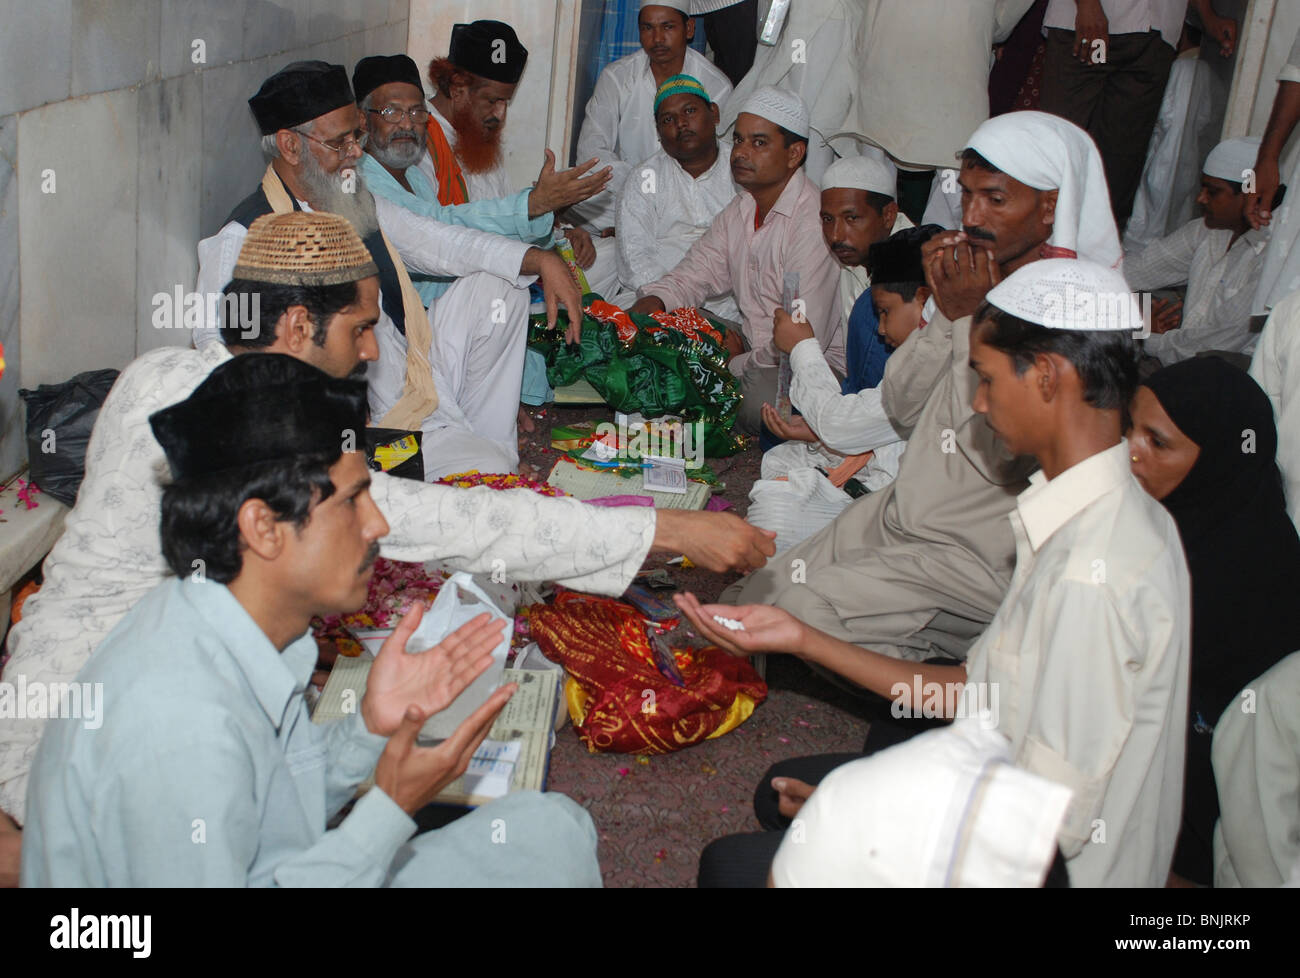 Muslims perform religious rites in Dargah during Urs. Stock Photo